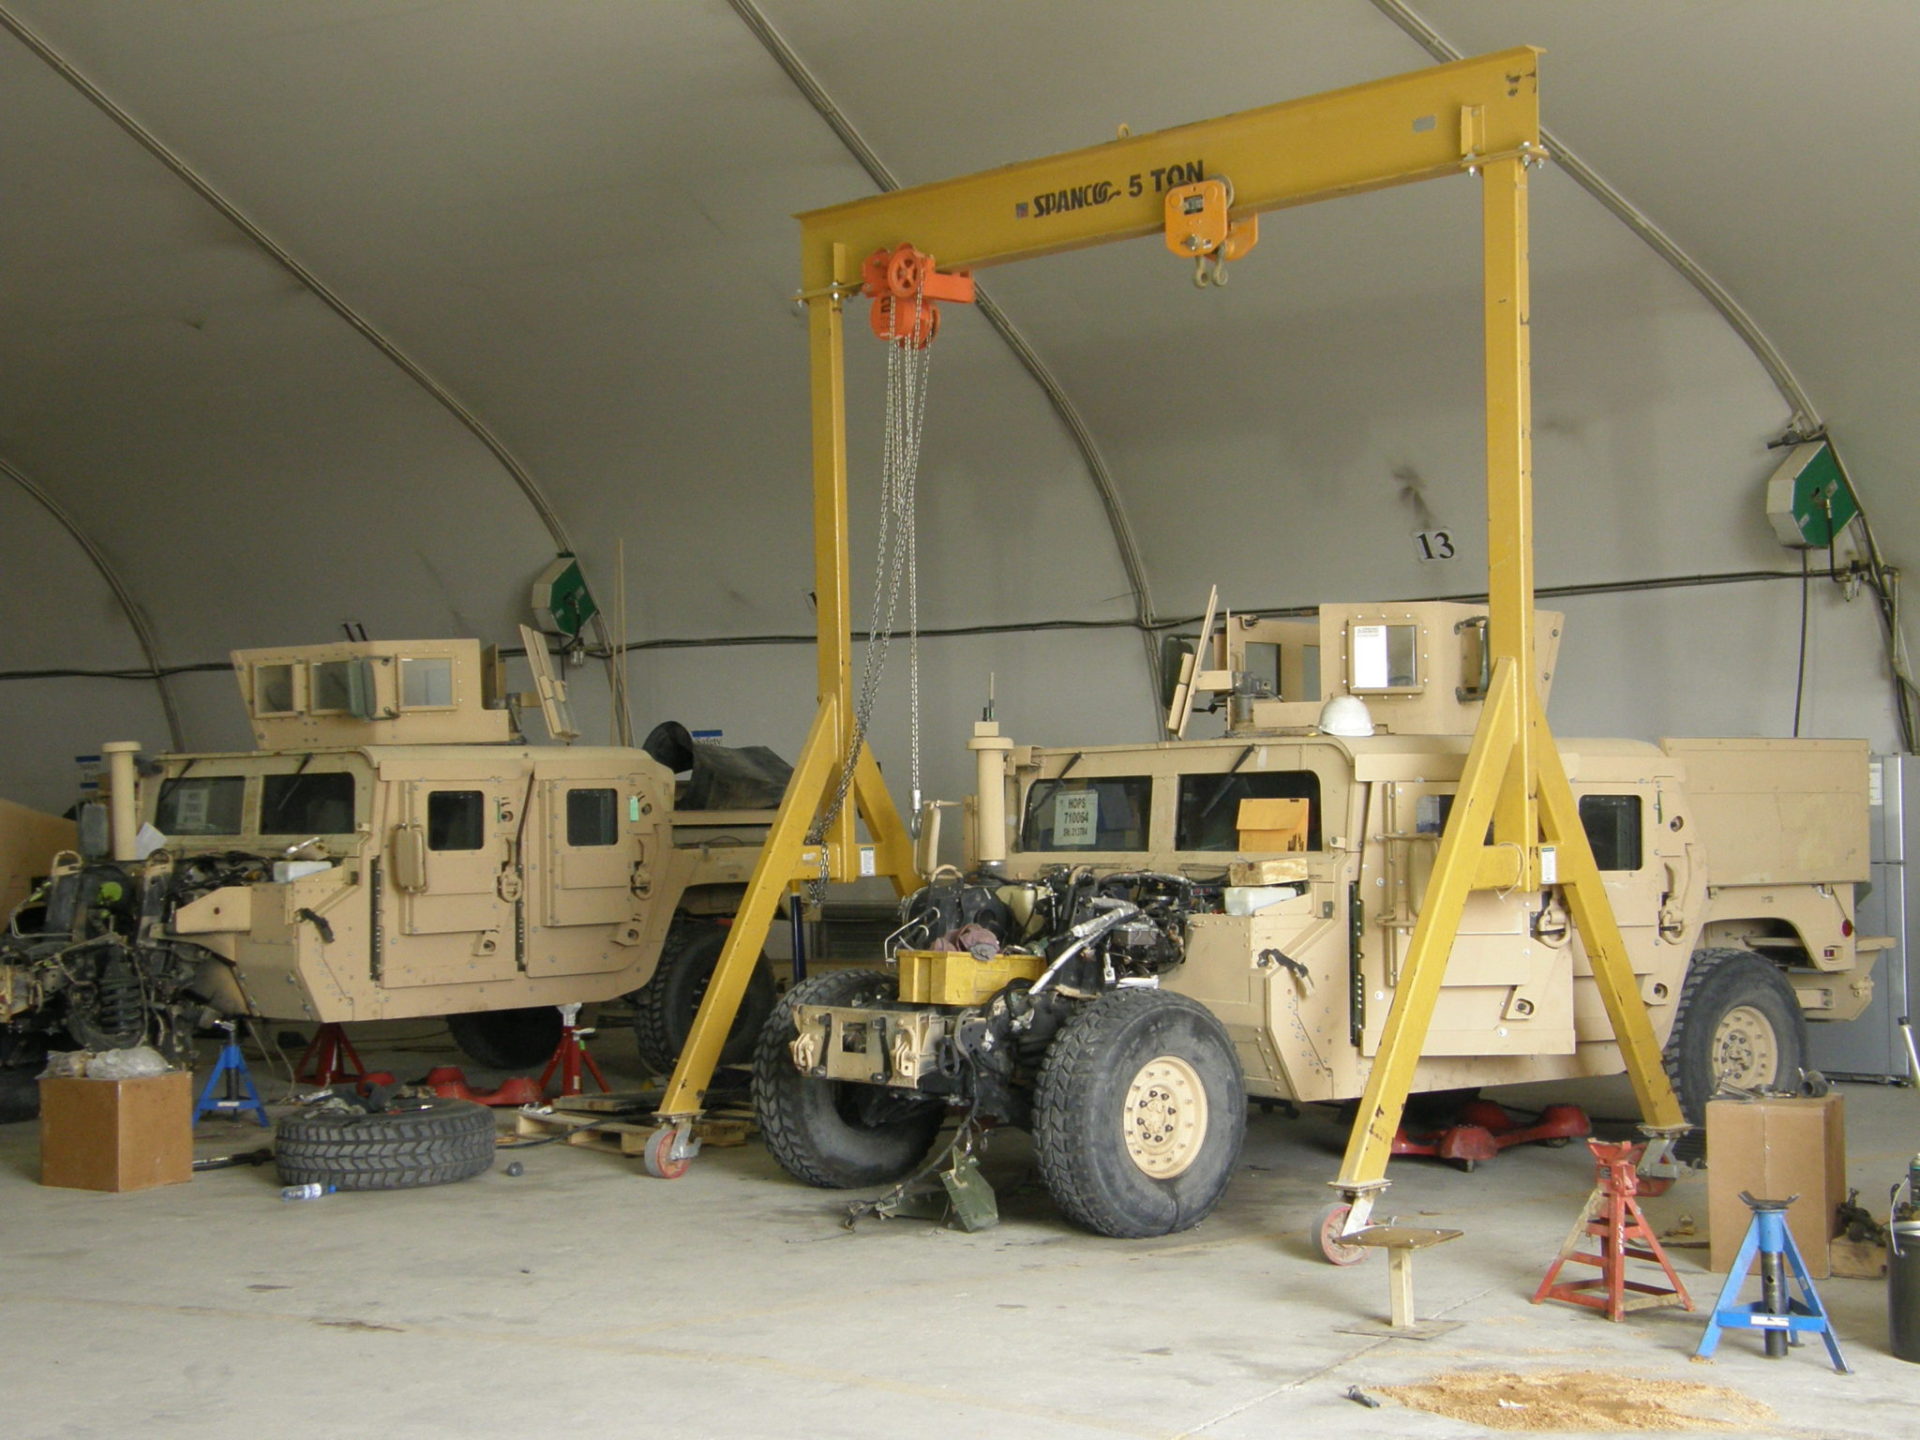 A-Series gantry cranes military vehicles